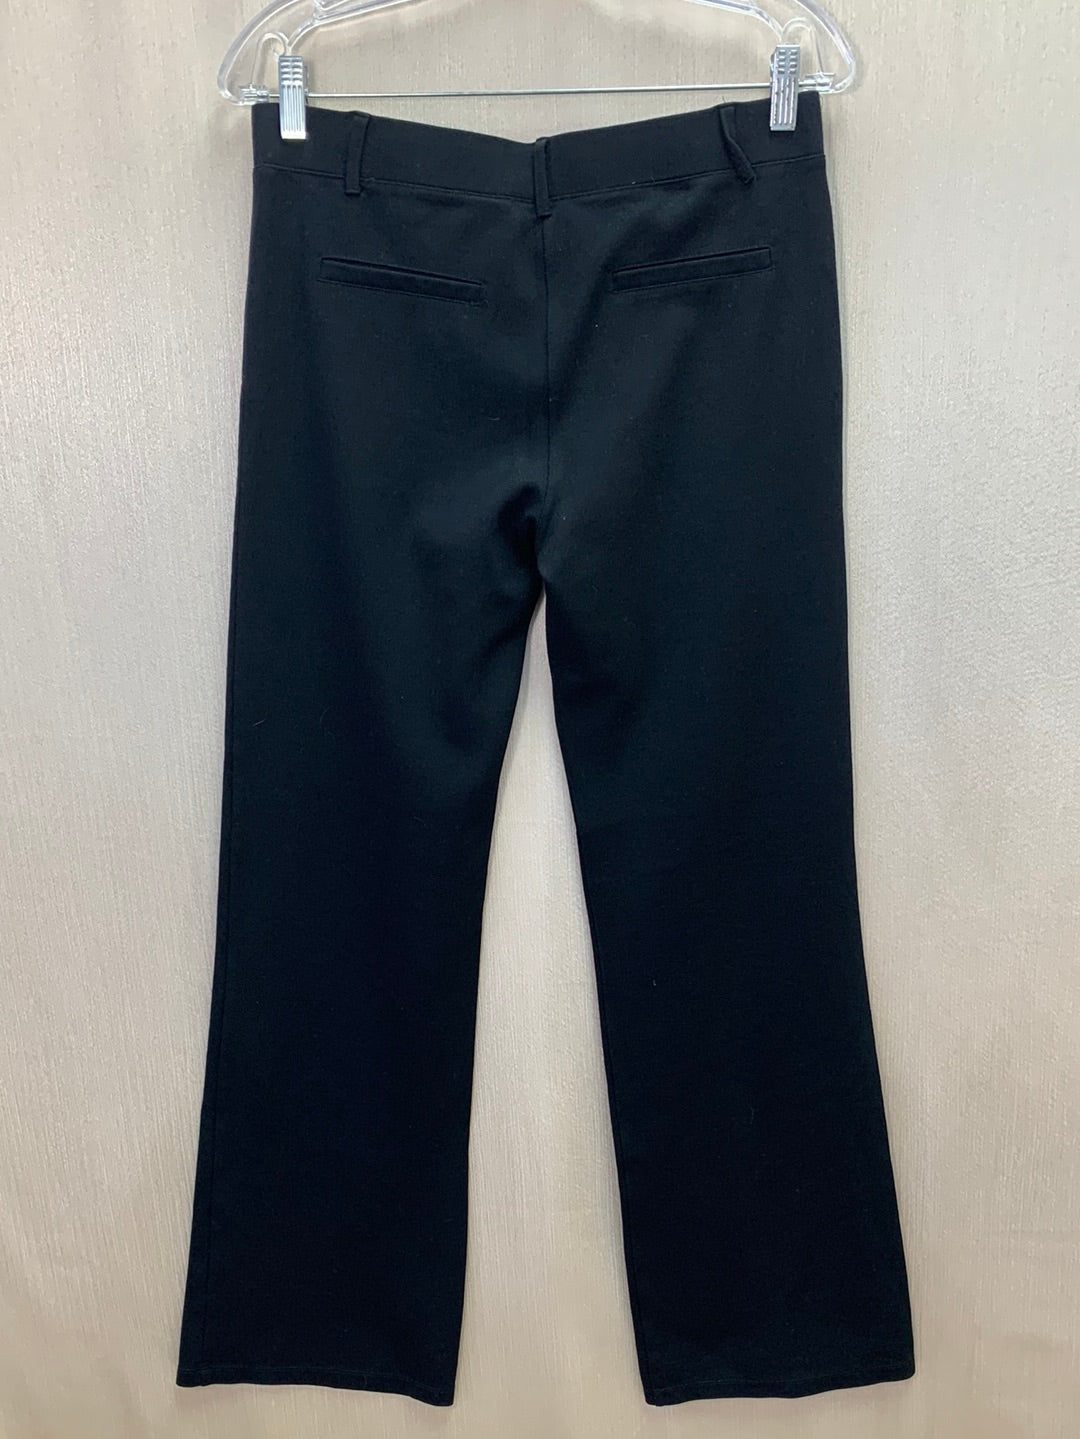 Betabrand Size Medium Black Six-Button Bootcut Dress Pant Yoga Pants